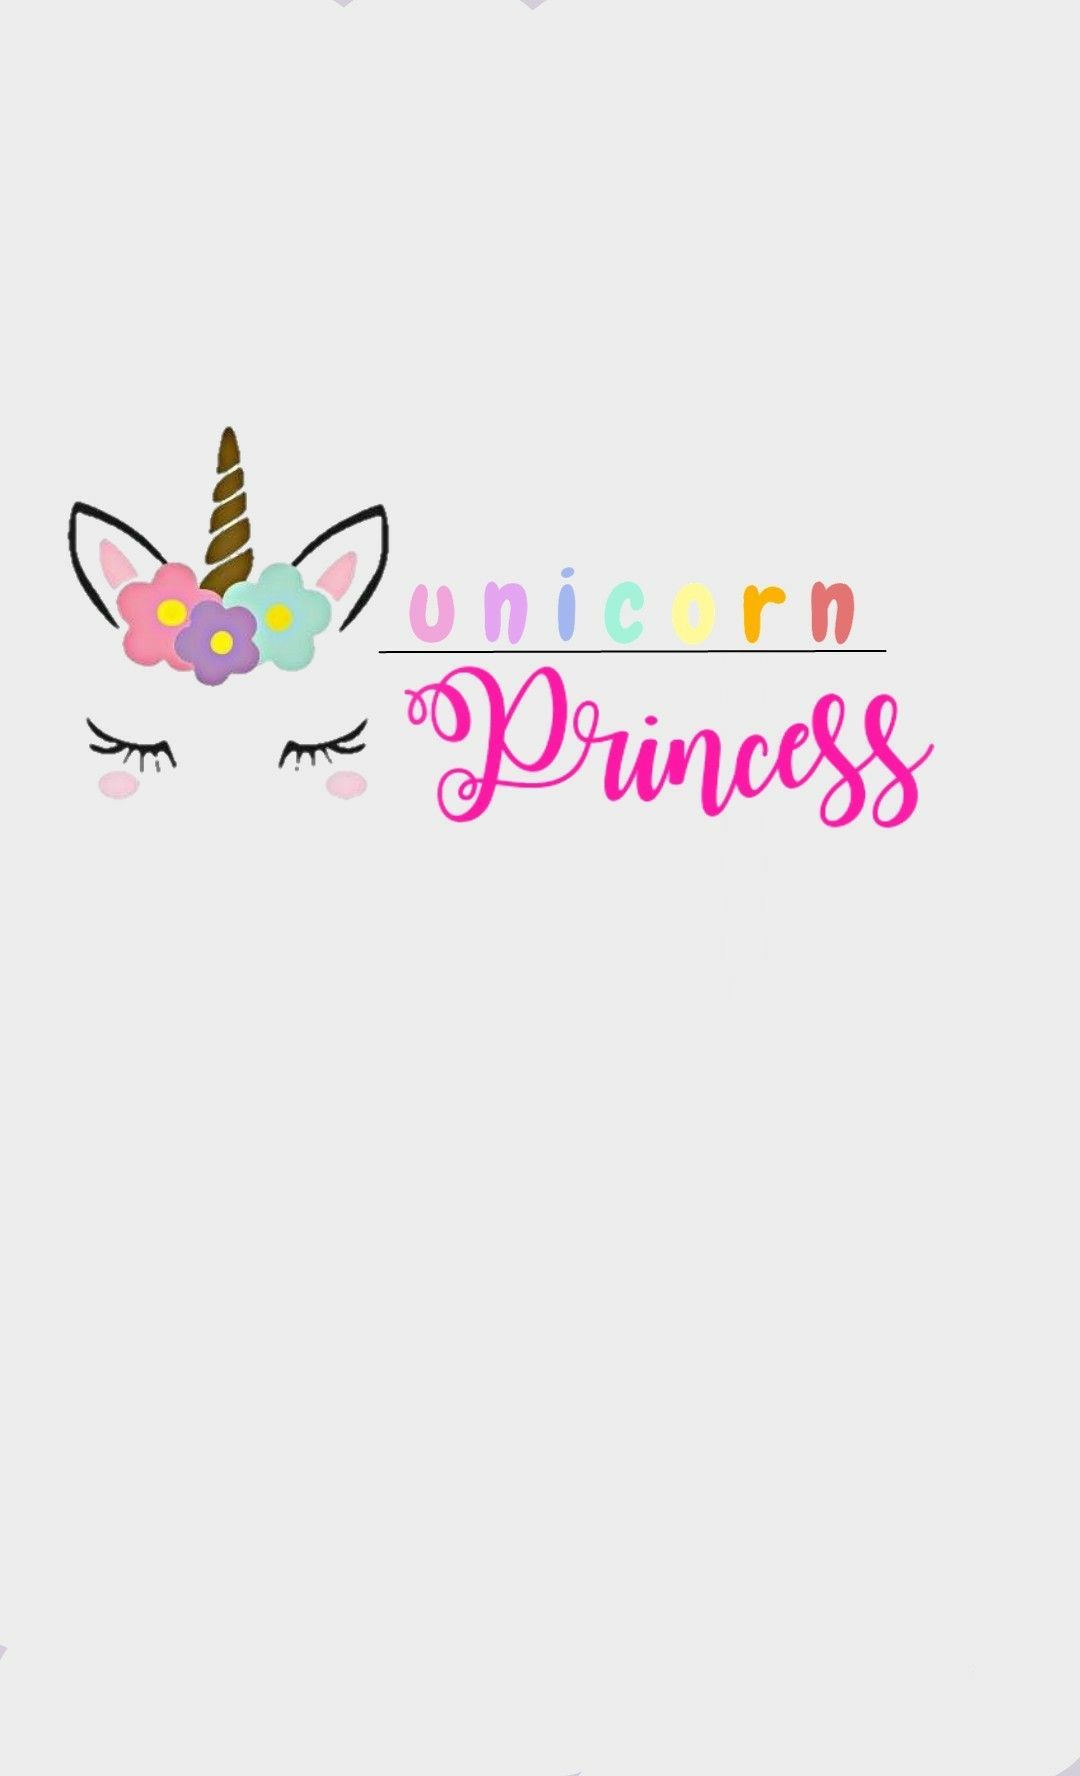 Unicorn Princess. Unicorn quotes, Unicorn wallpaper, Unicorn party